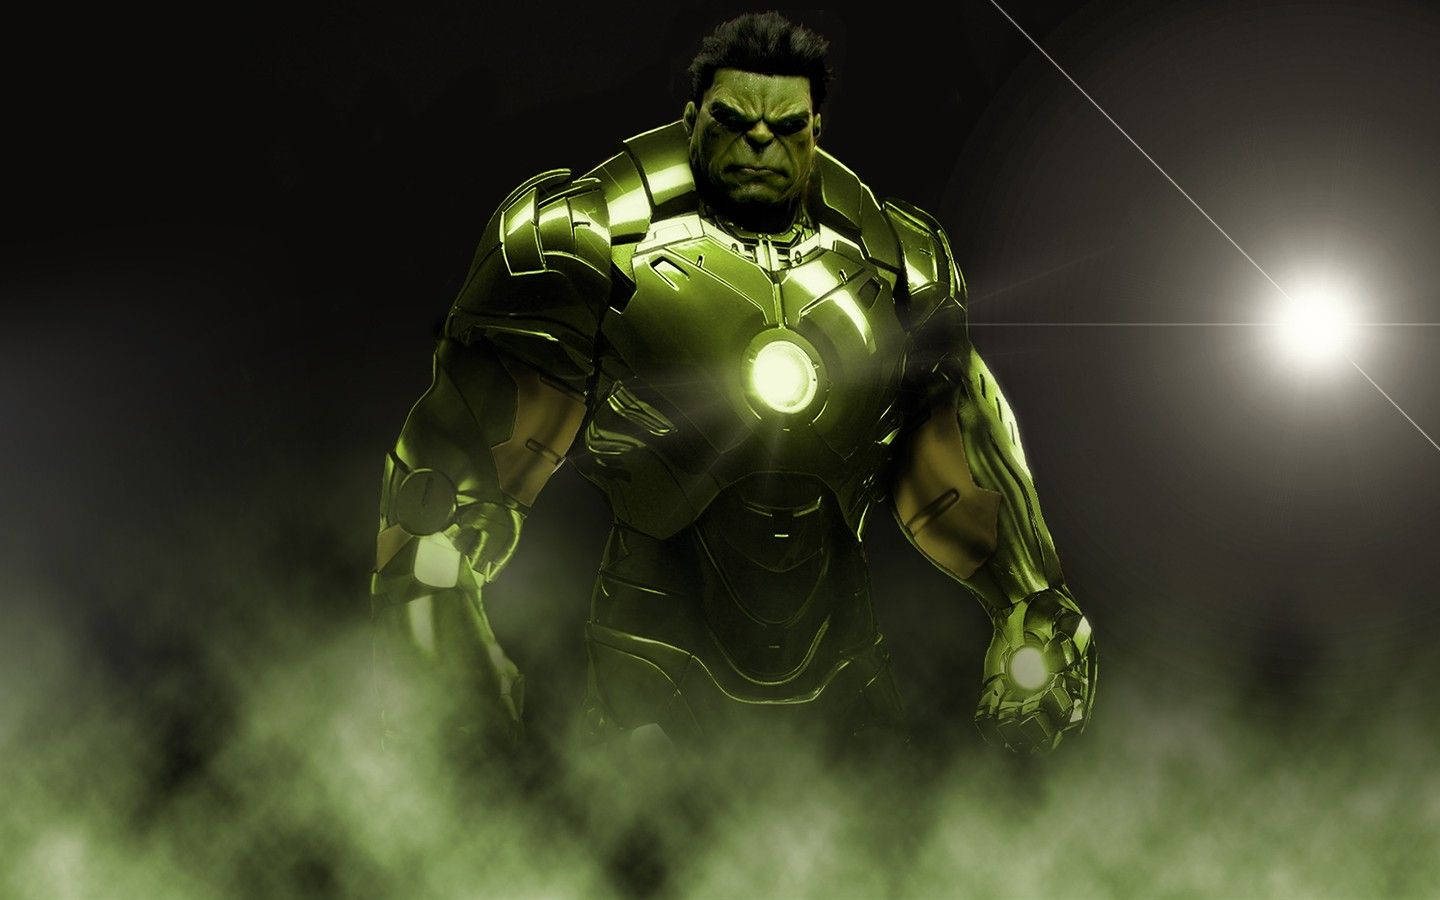 Hulk 1440X900 Wallpaper and Background Image